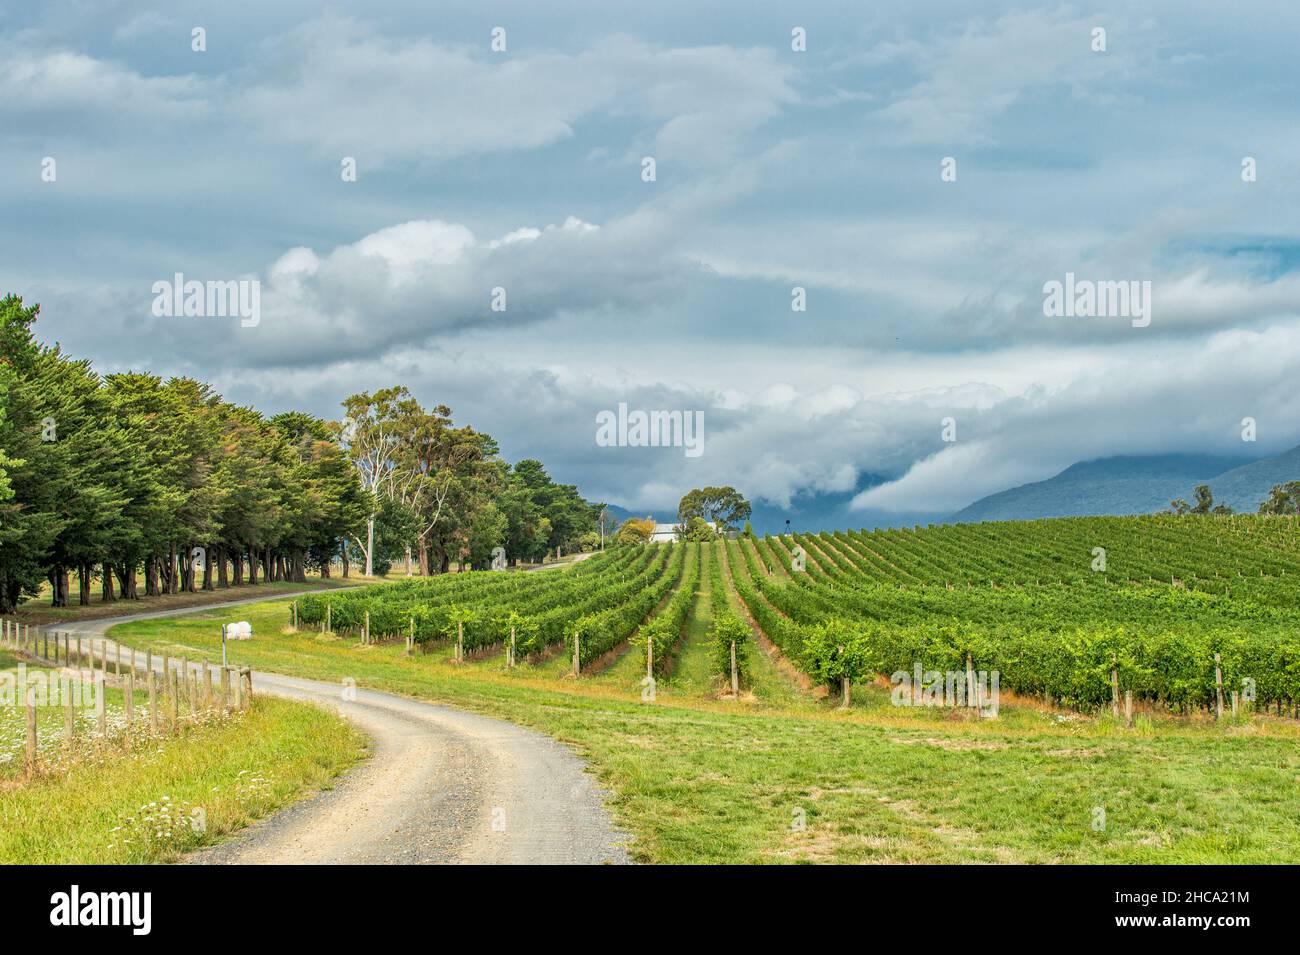 Vineyards in Yarra Valley, Victoria. Yarra Valley is one of Australia’s premium wine growing regions. Stock Photo